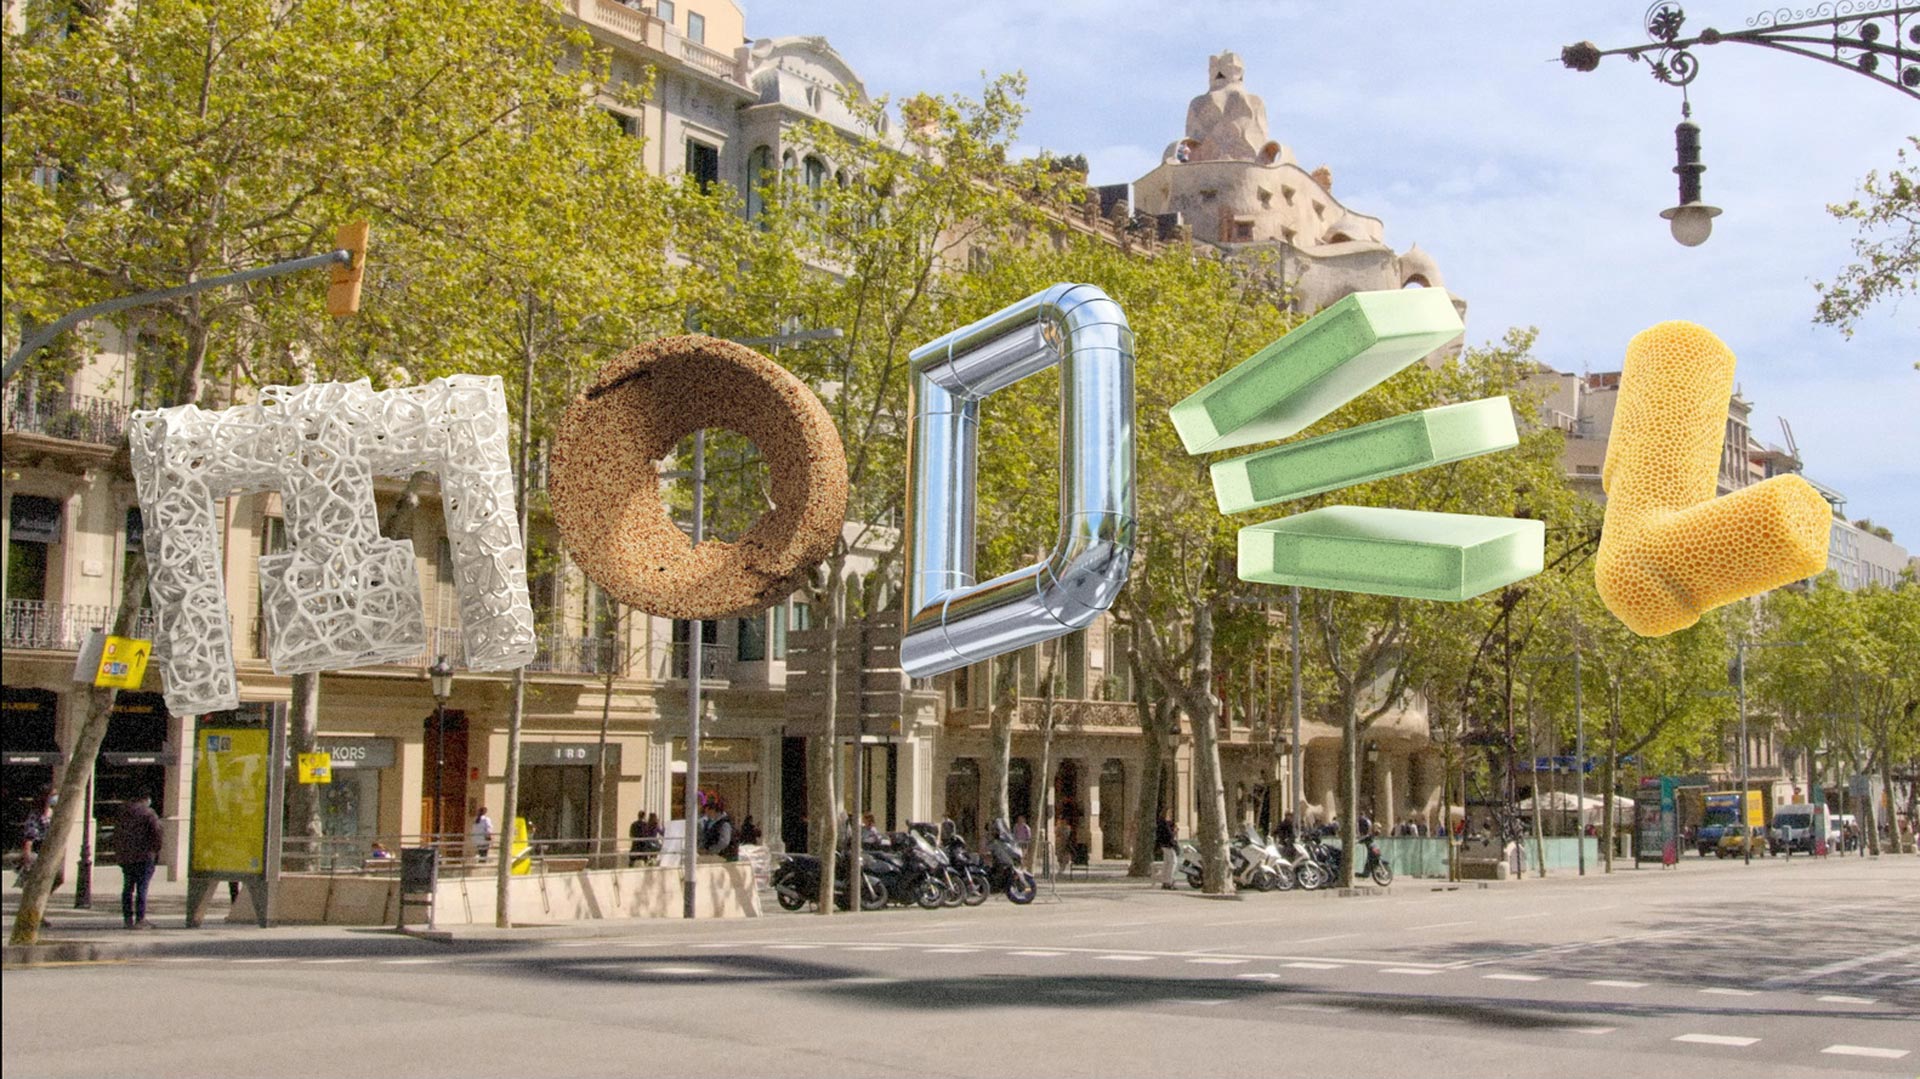 Festival de Arquitectura de Barcelona: MODEL